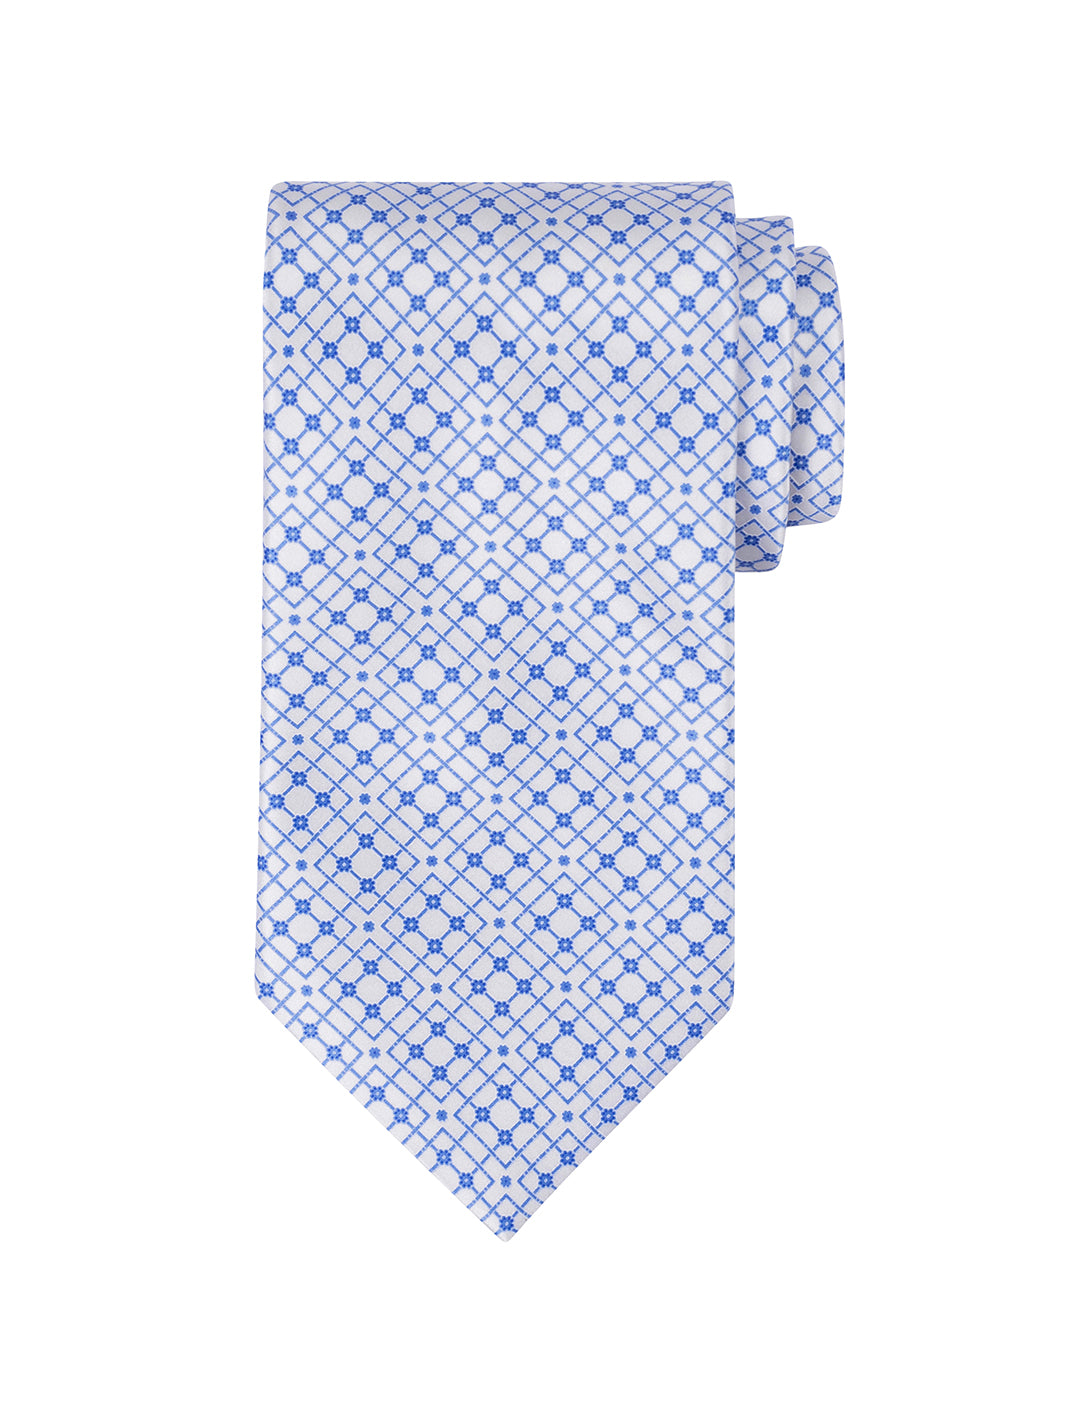 Stefano Ricci Blue and White Tie